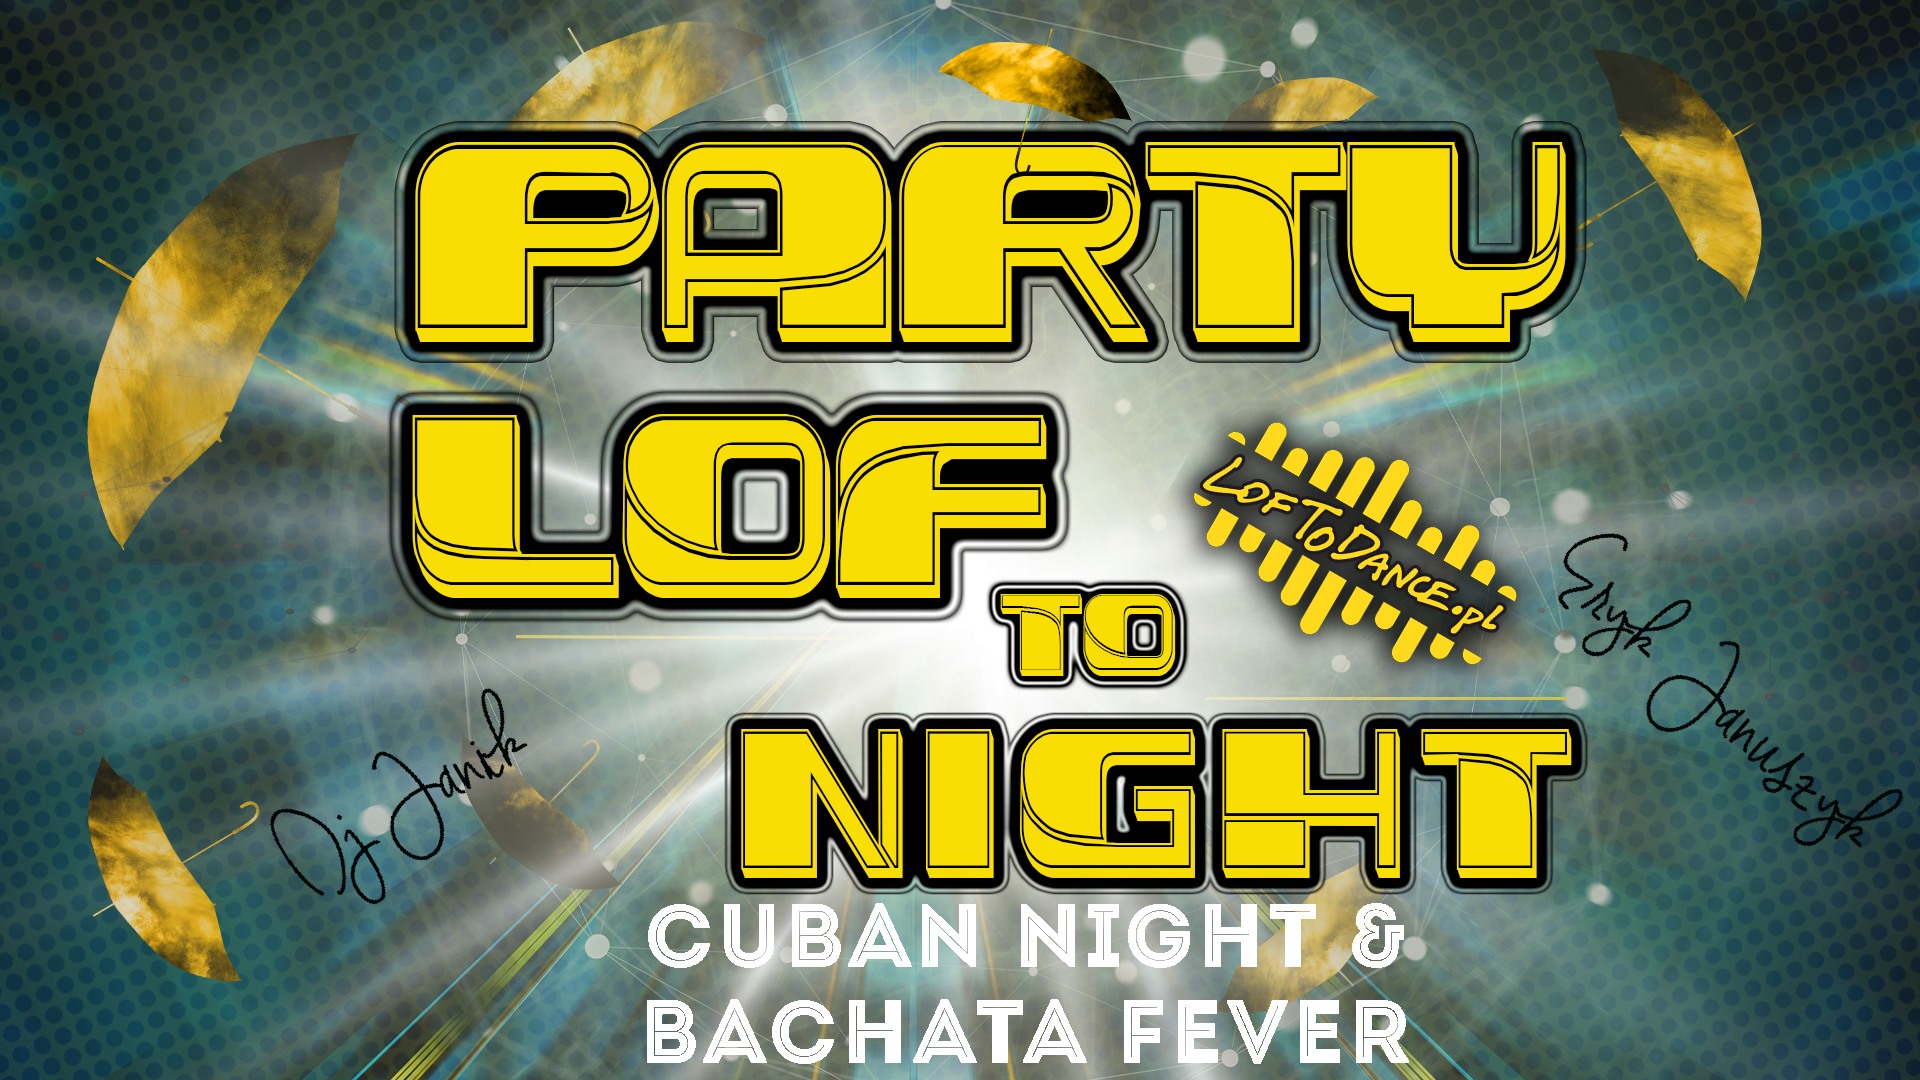 LOF ToNight? - Cuban Night & Bachata Fever